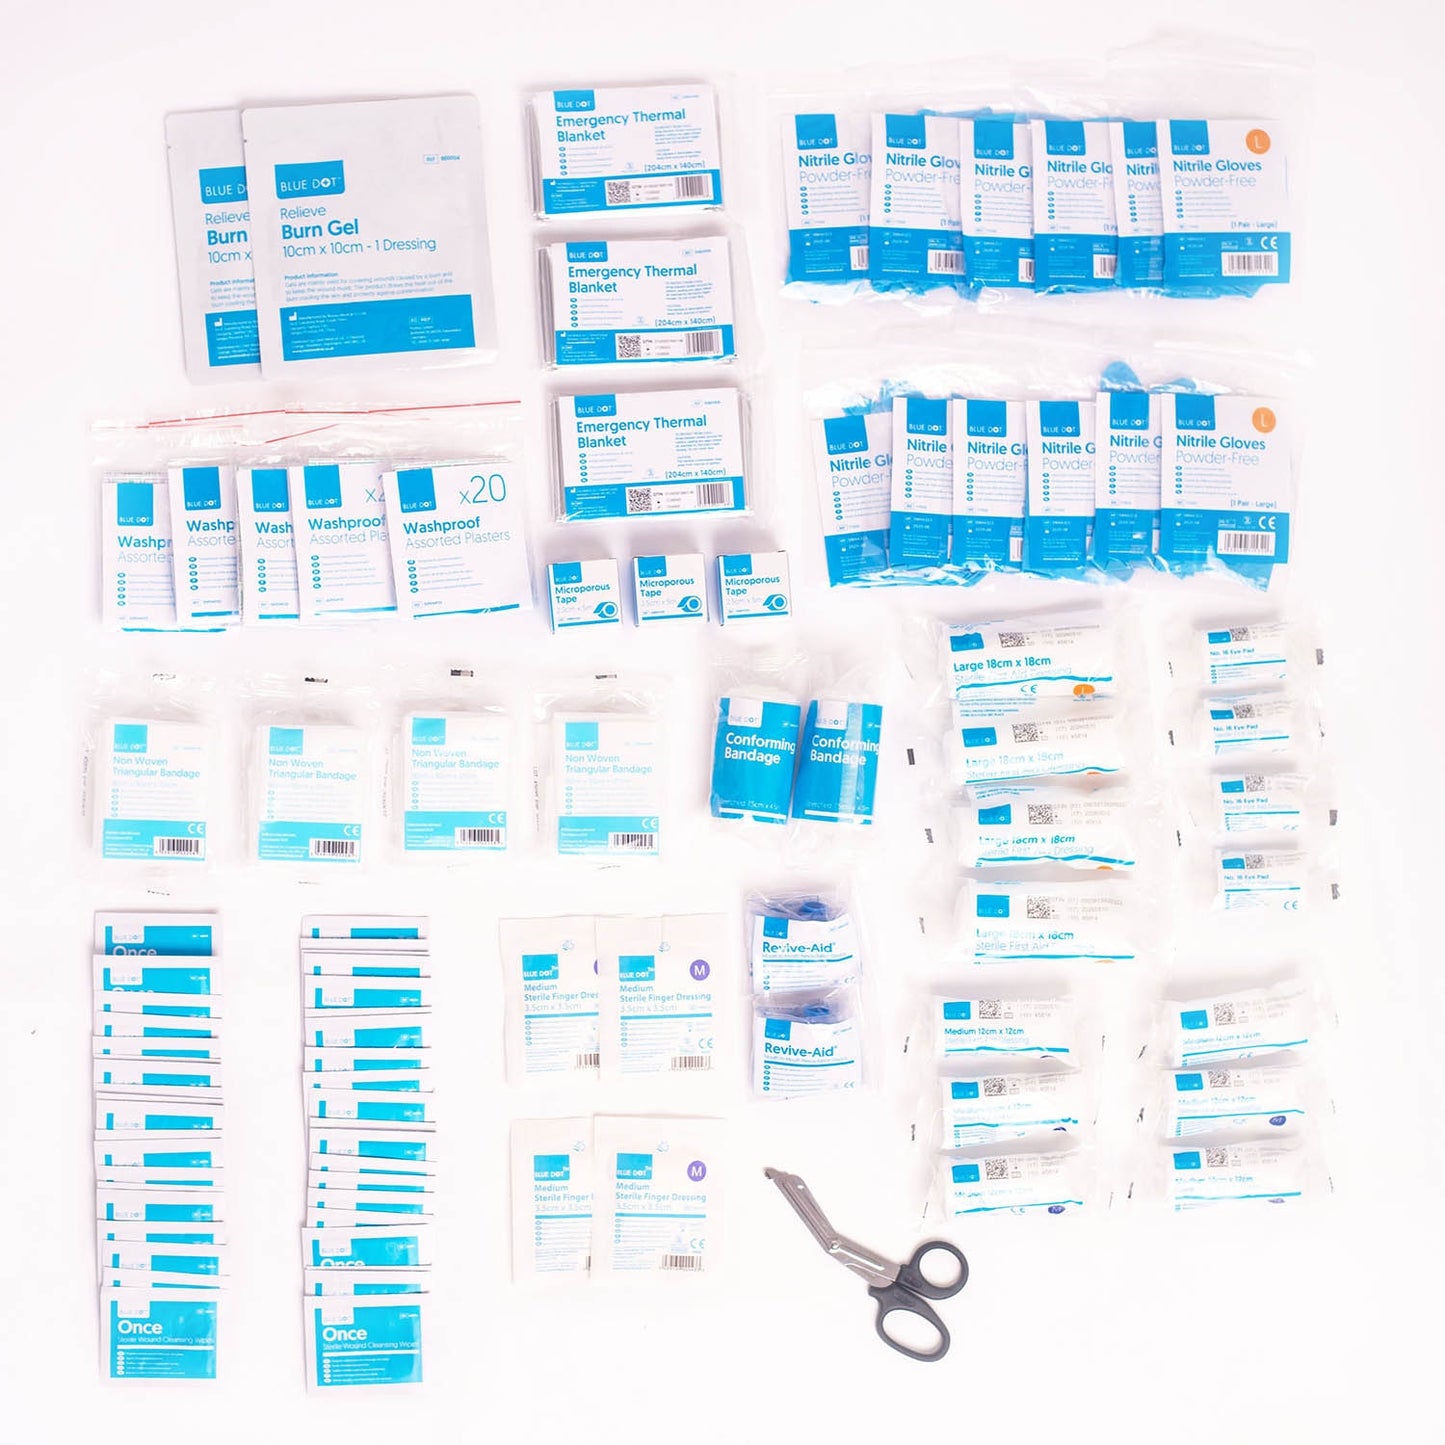 BS 8599-1 2019 PGB Medium First Aid Kit